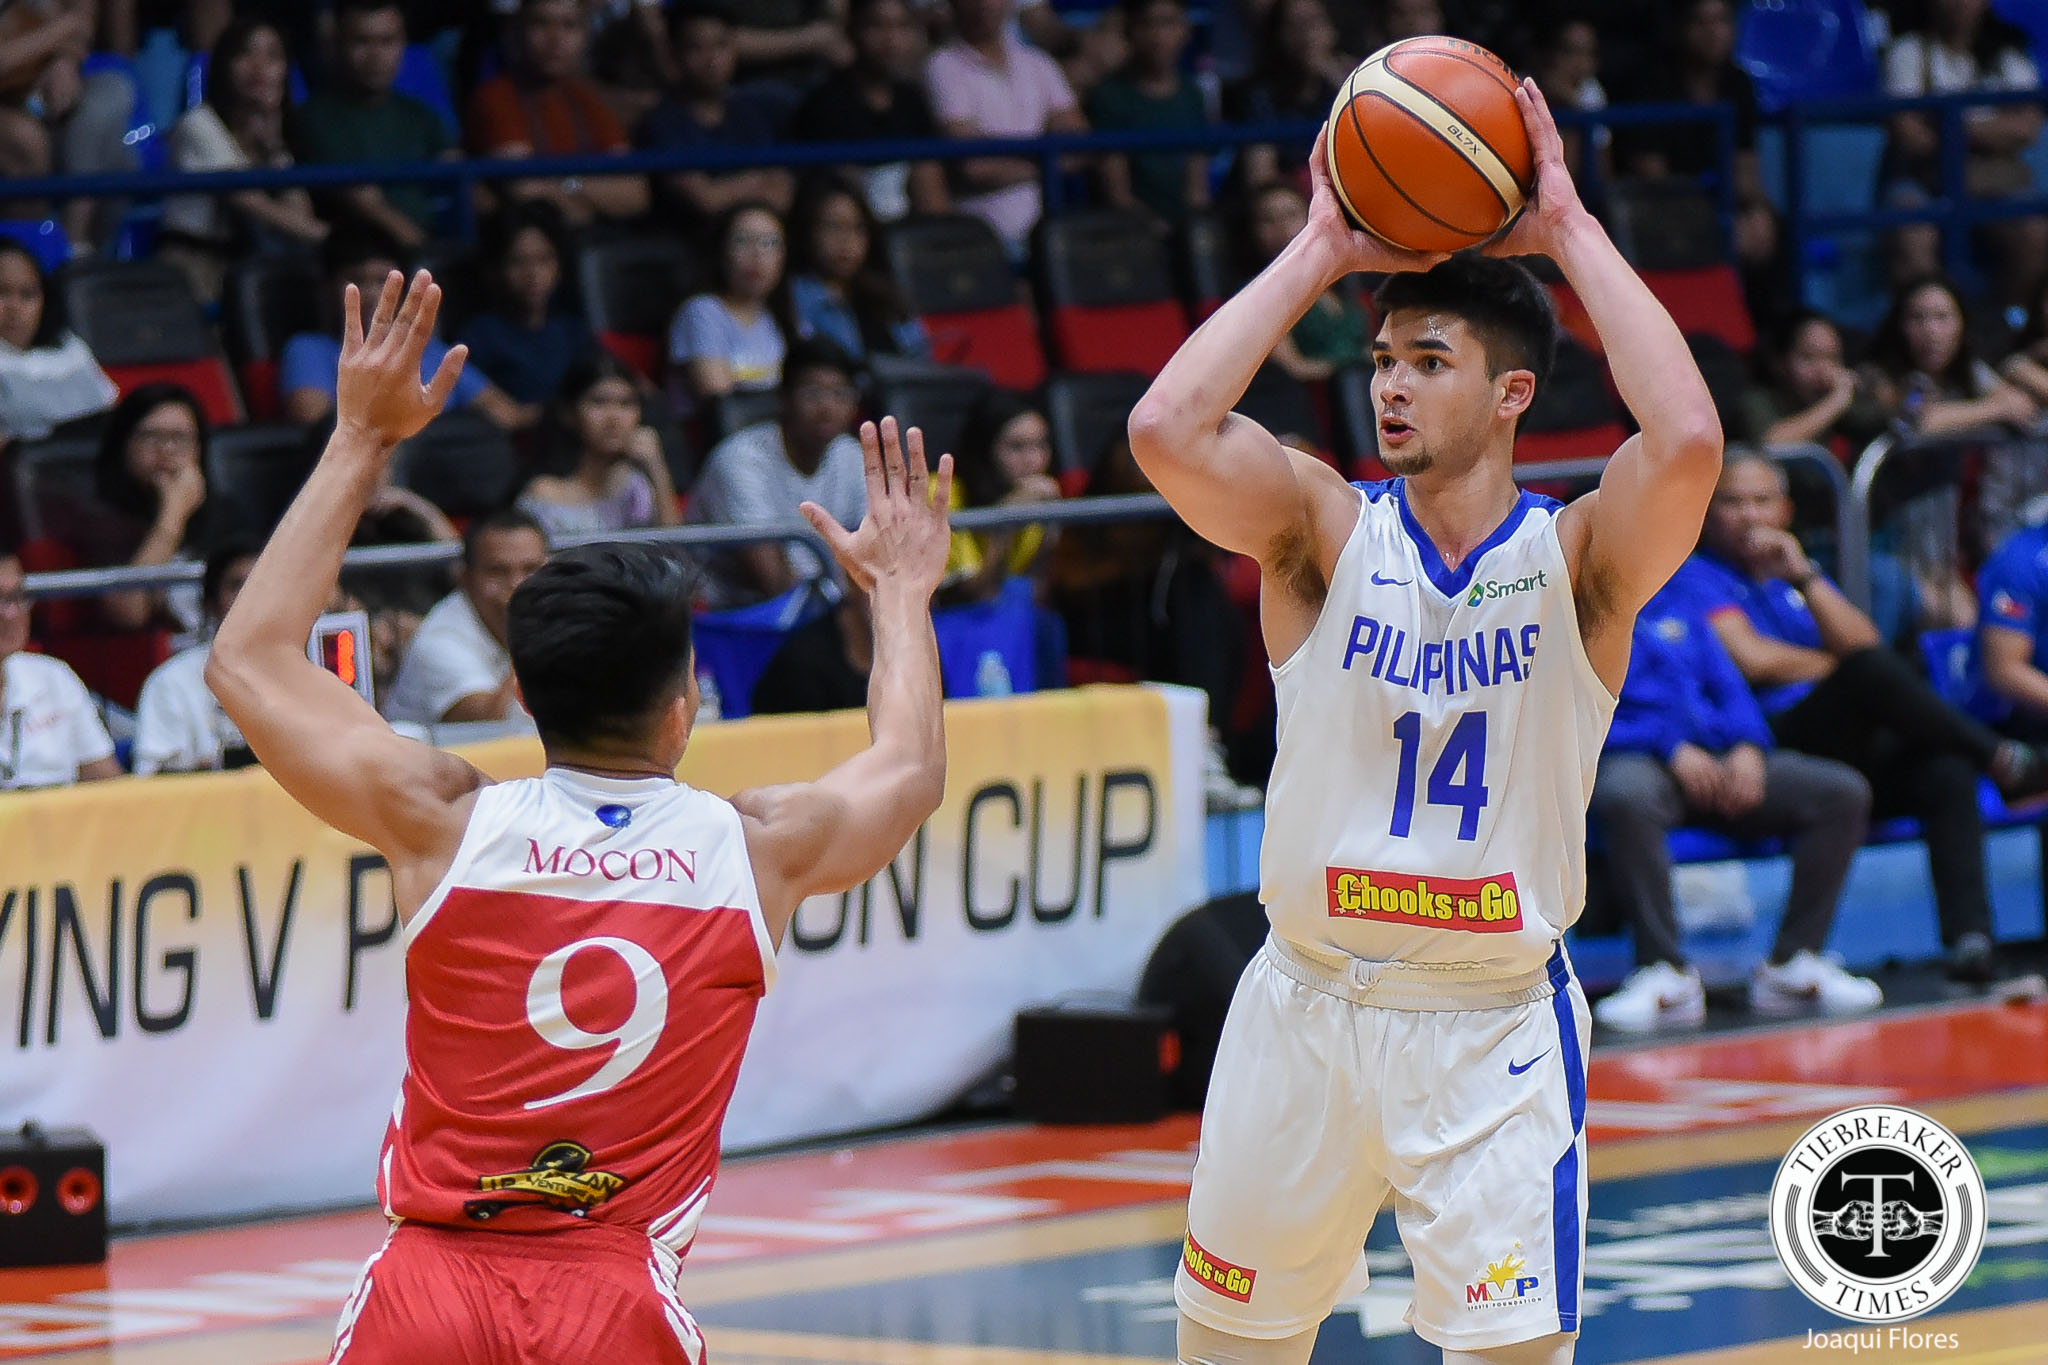 Filoil-2018-SBU-vs.-Gilas-cadets-Paras-2353 Should Kobe Paras return to college? Basketball Gilas Pilipinas News  - philippine sports news